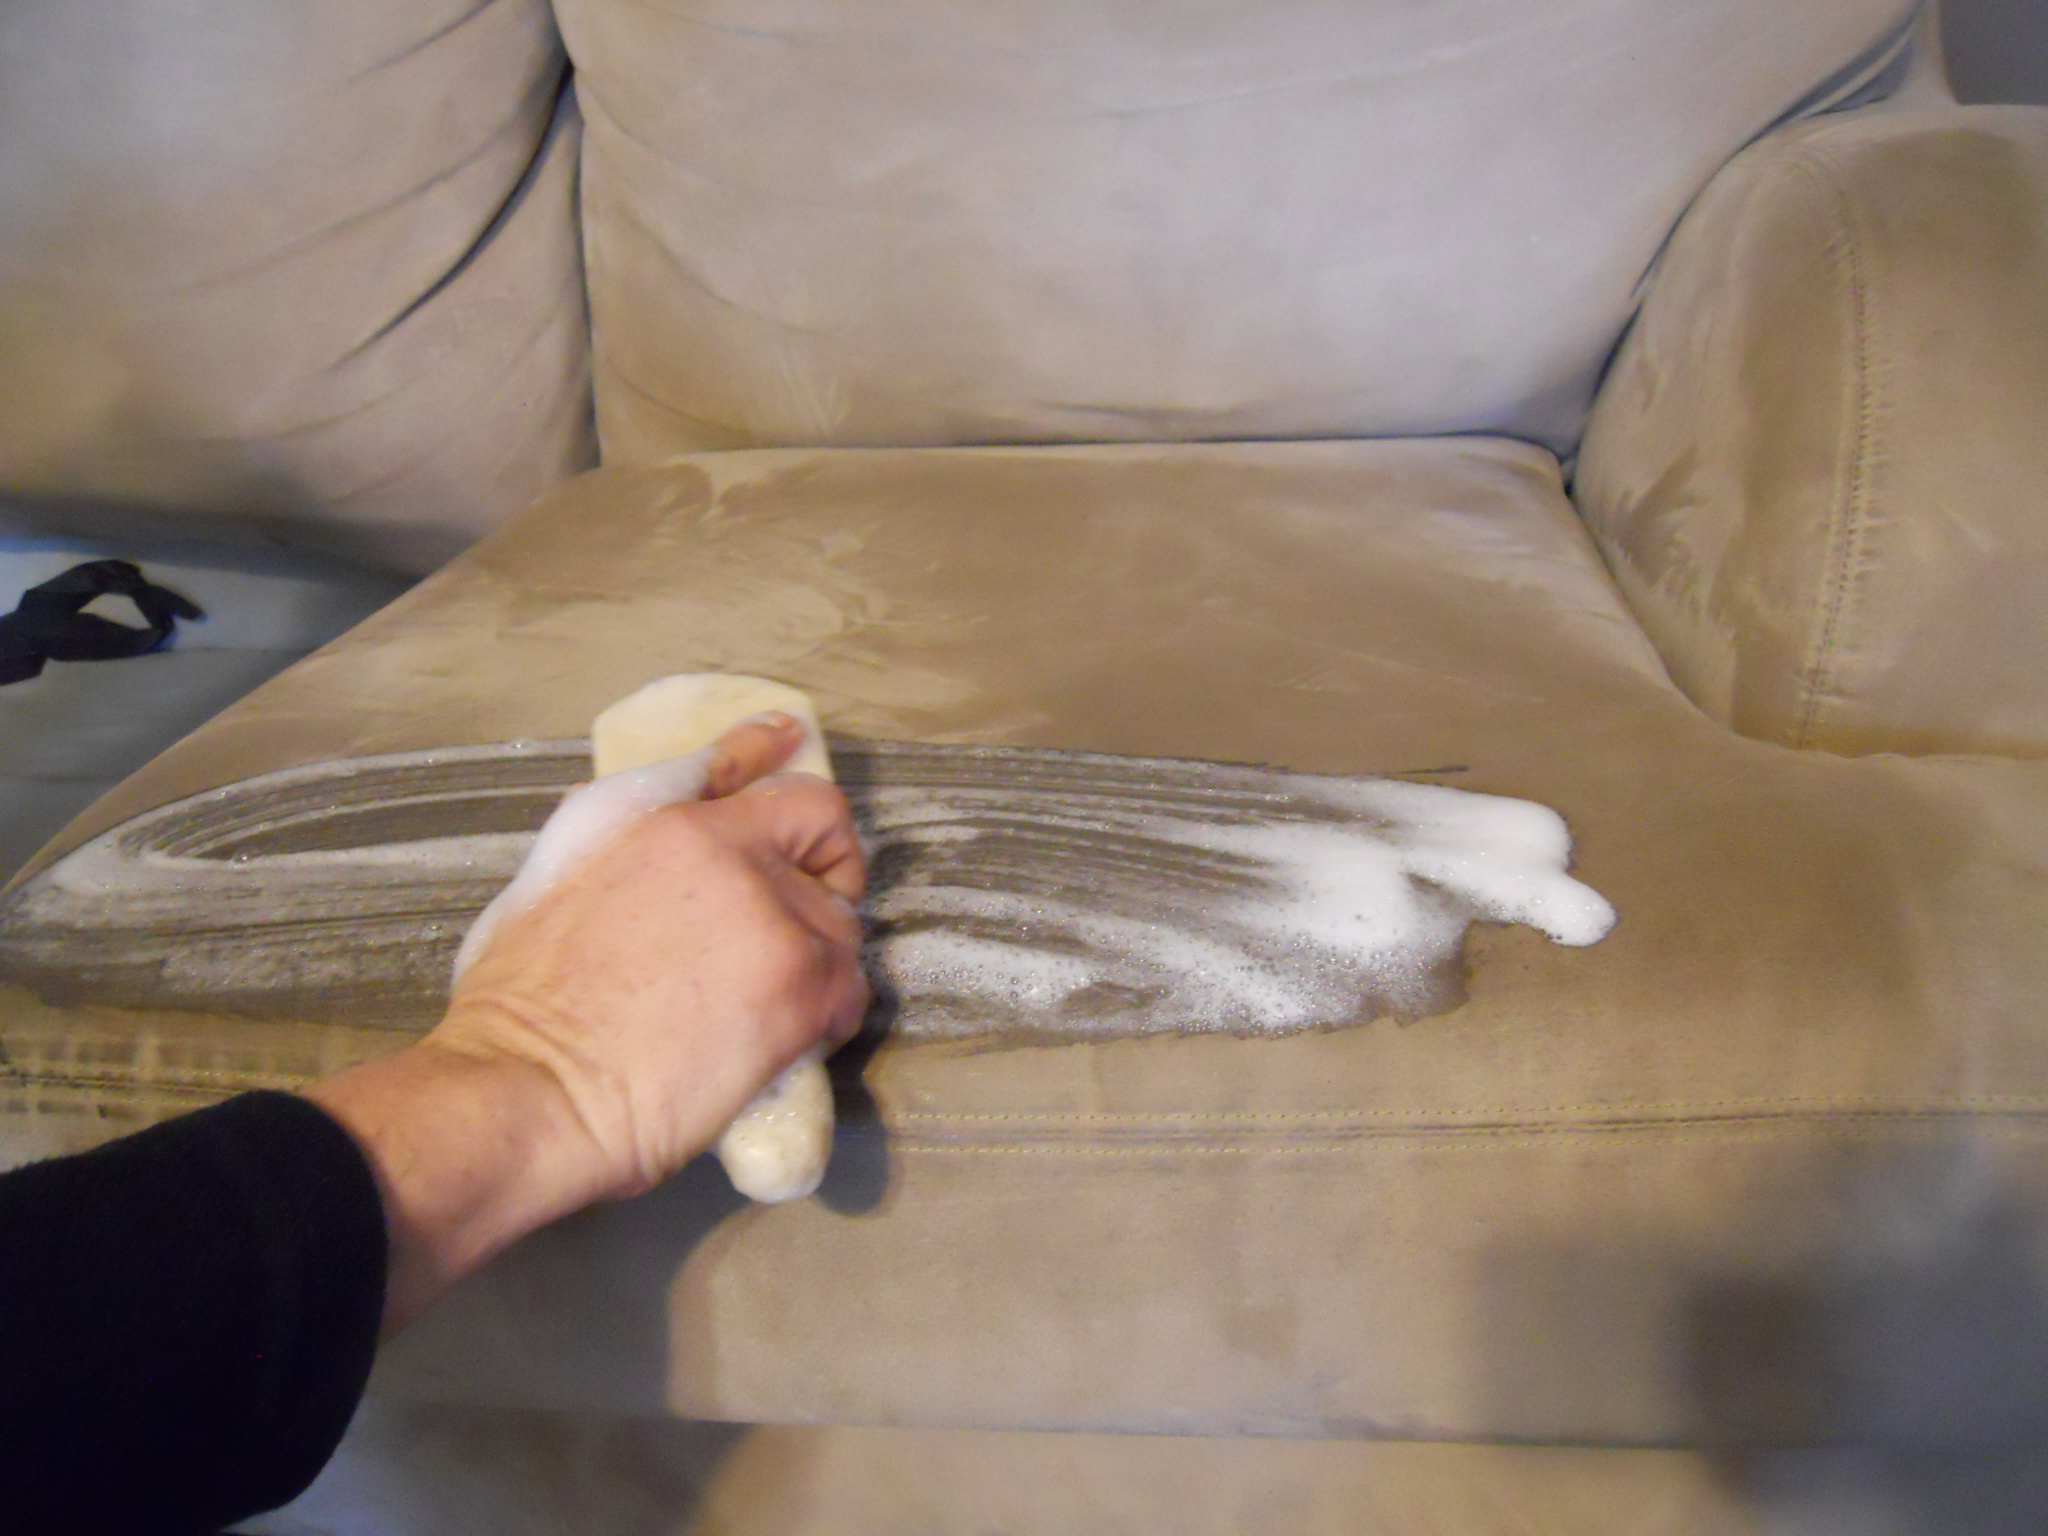 лучшее средство для чистки дивана в домашних условиях